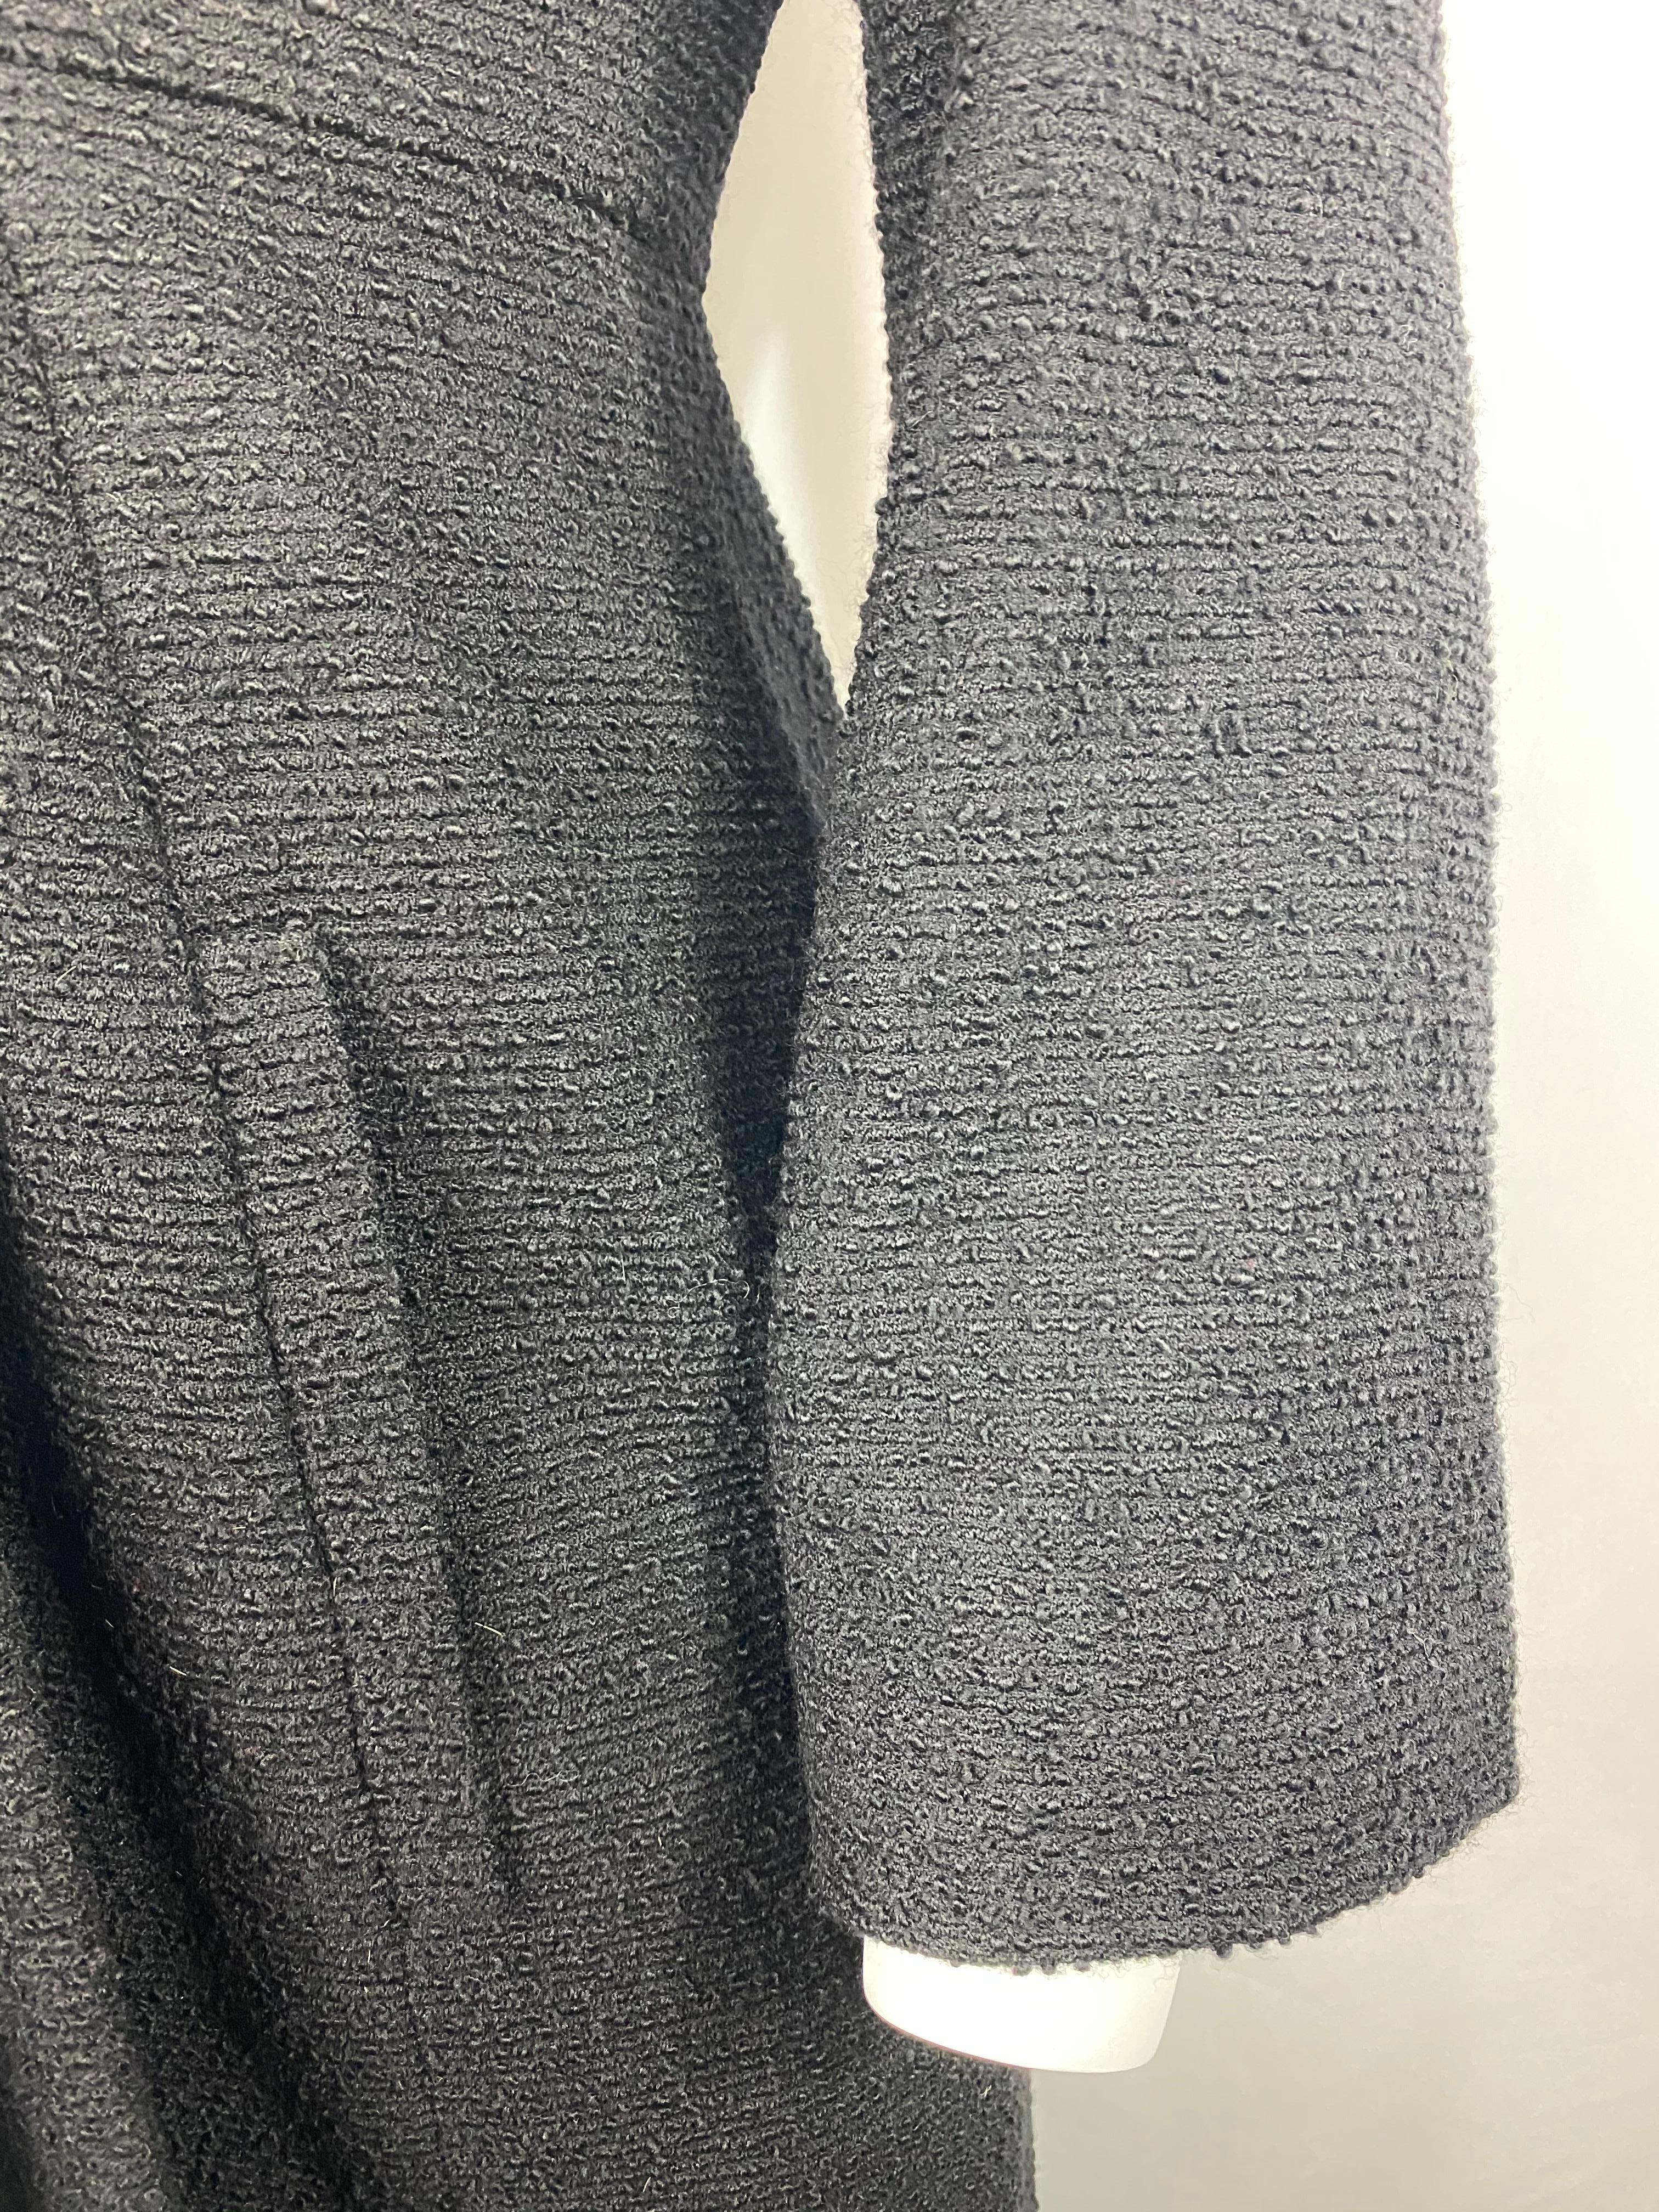 Christian Dior Black Wool Tweed and Fur Coat Jacket Size 40 4